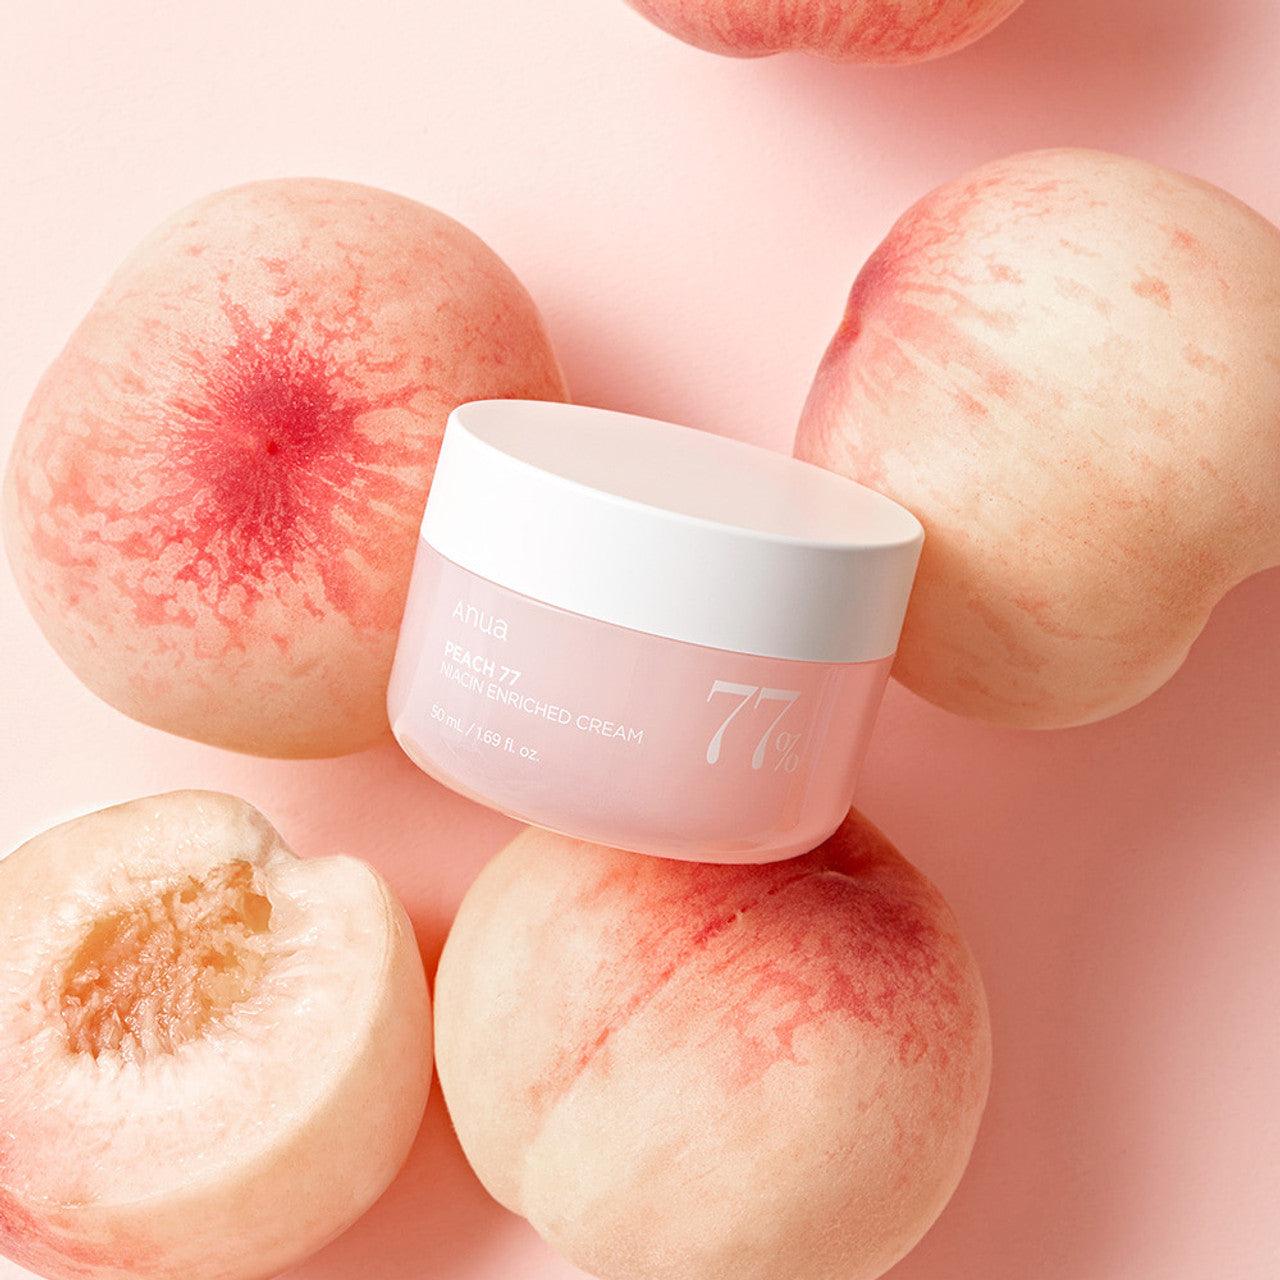 Peach 77 Niacin Enriched Cream - 50 ml - K-Beauty Arabia